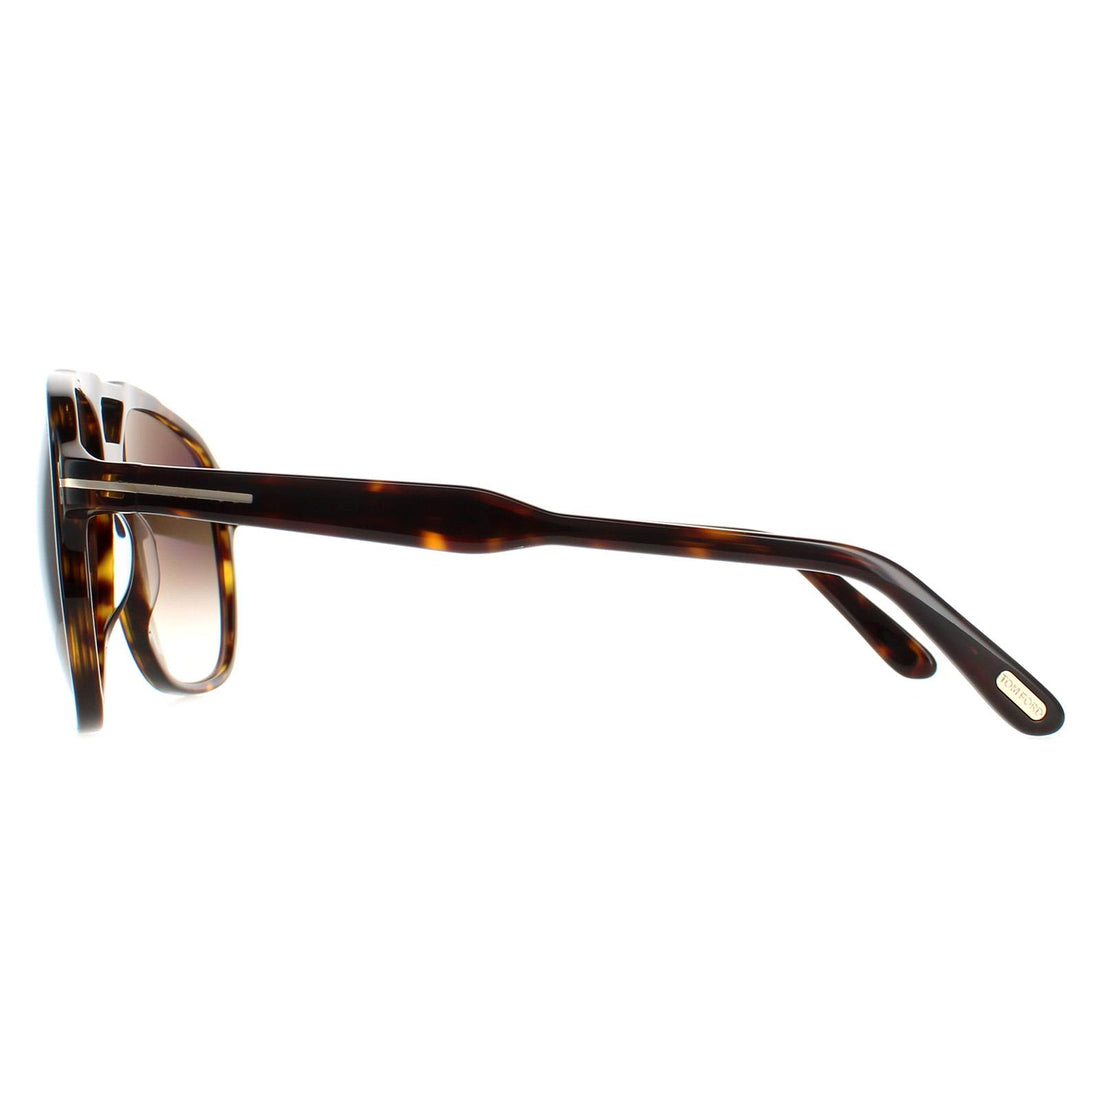 Tom Ford Sunglasses Raoul FT0753 52K Dark Havana Roviex Gradient